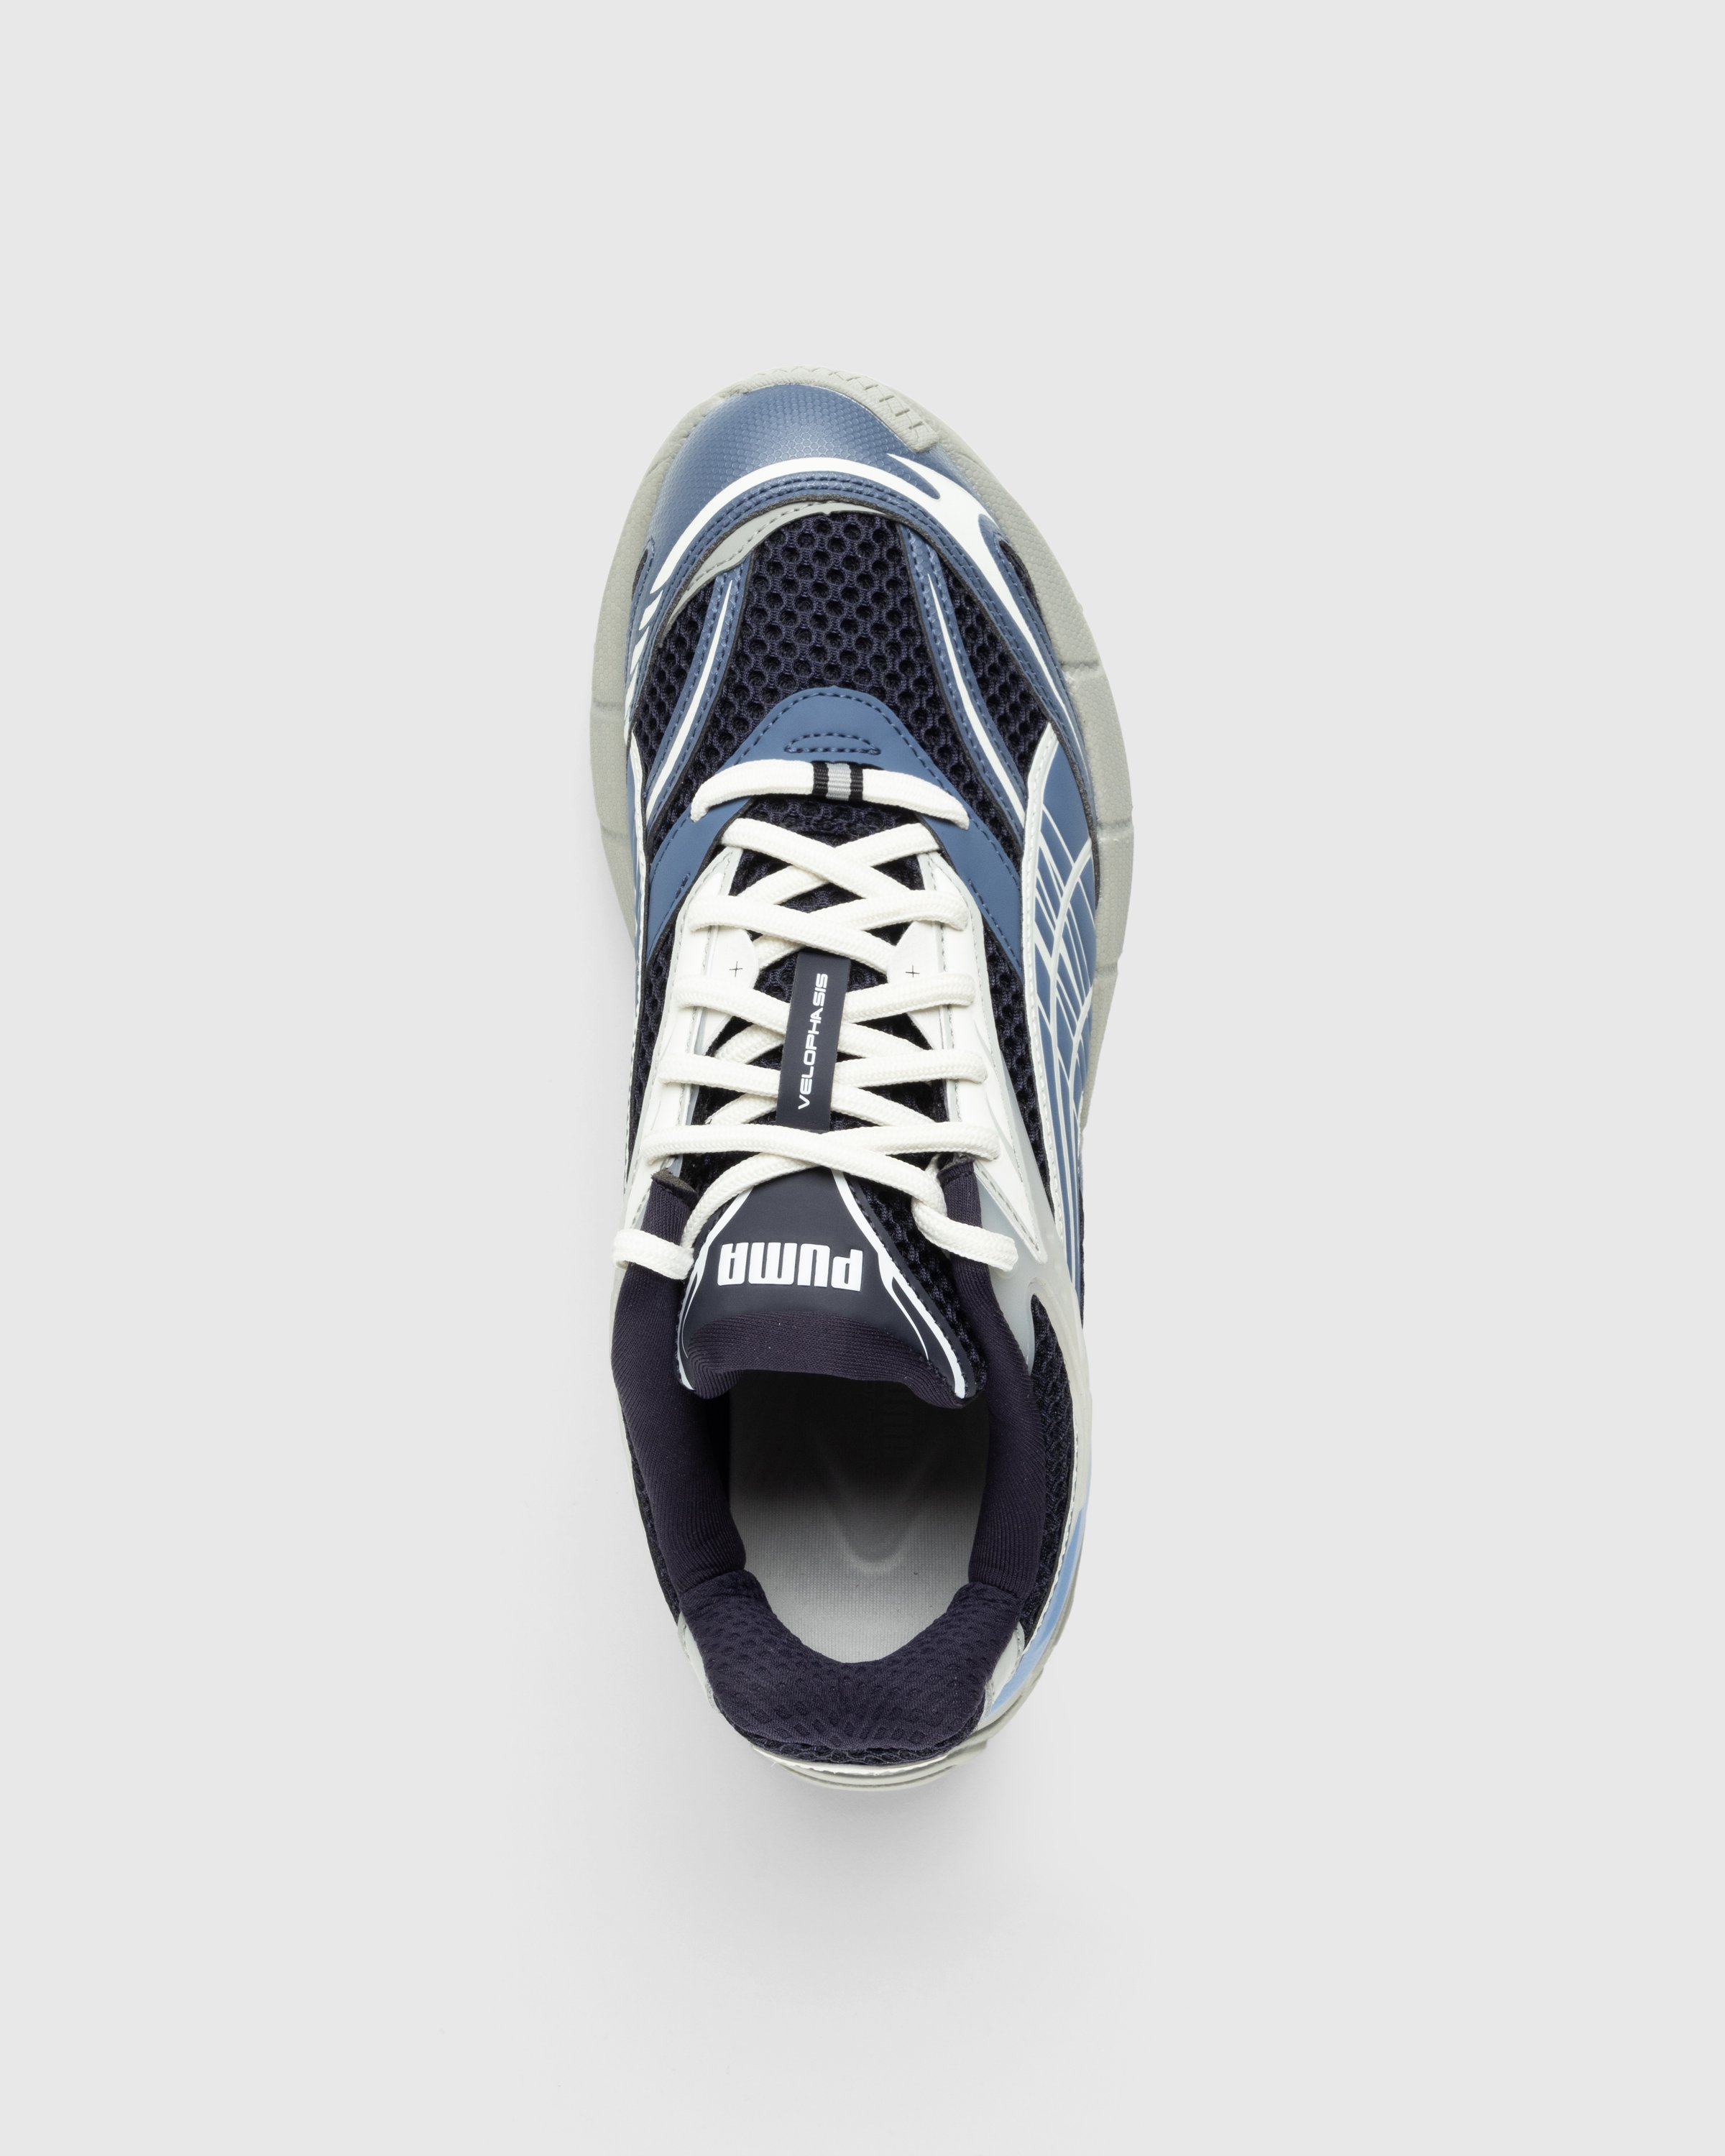 Puma - Velophasis Phased White/Blue - Footwear - Multi - Image 5